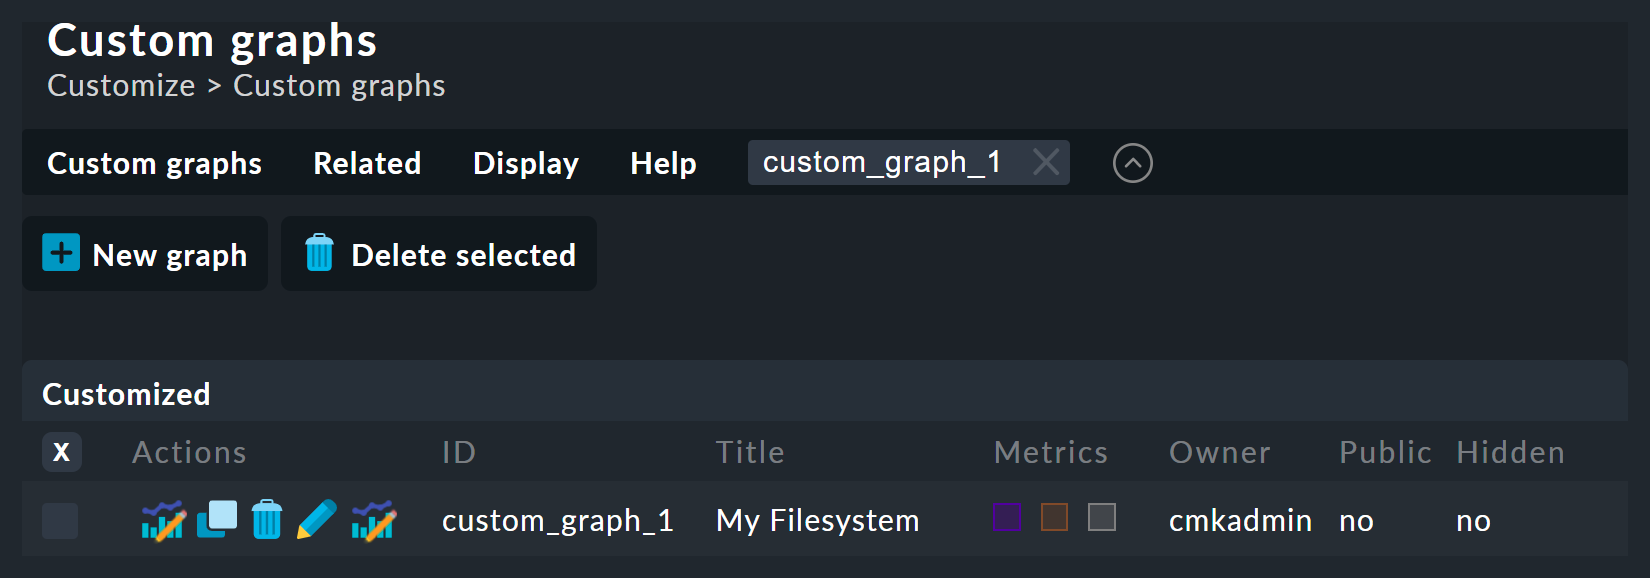 custom graph list